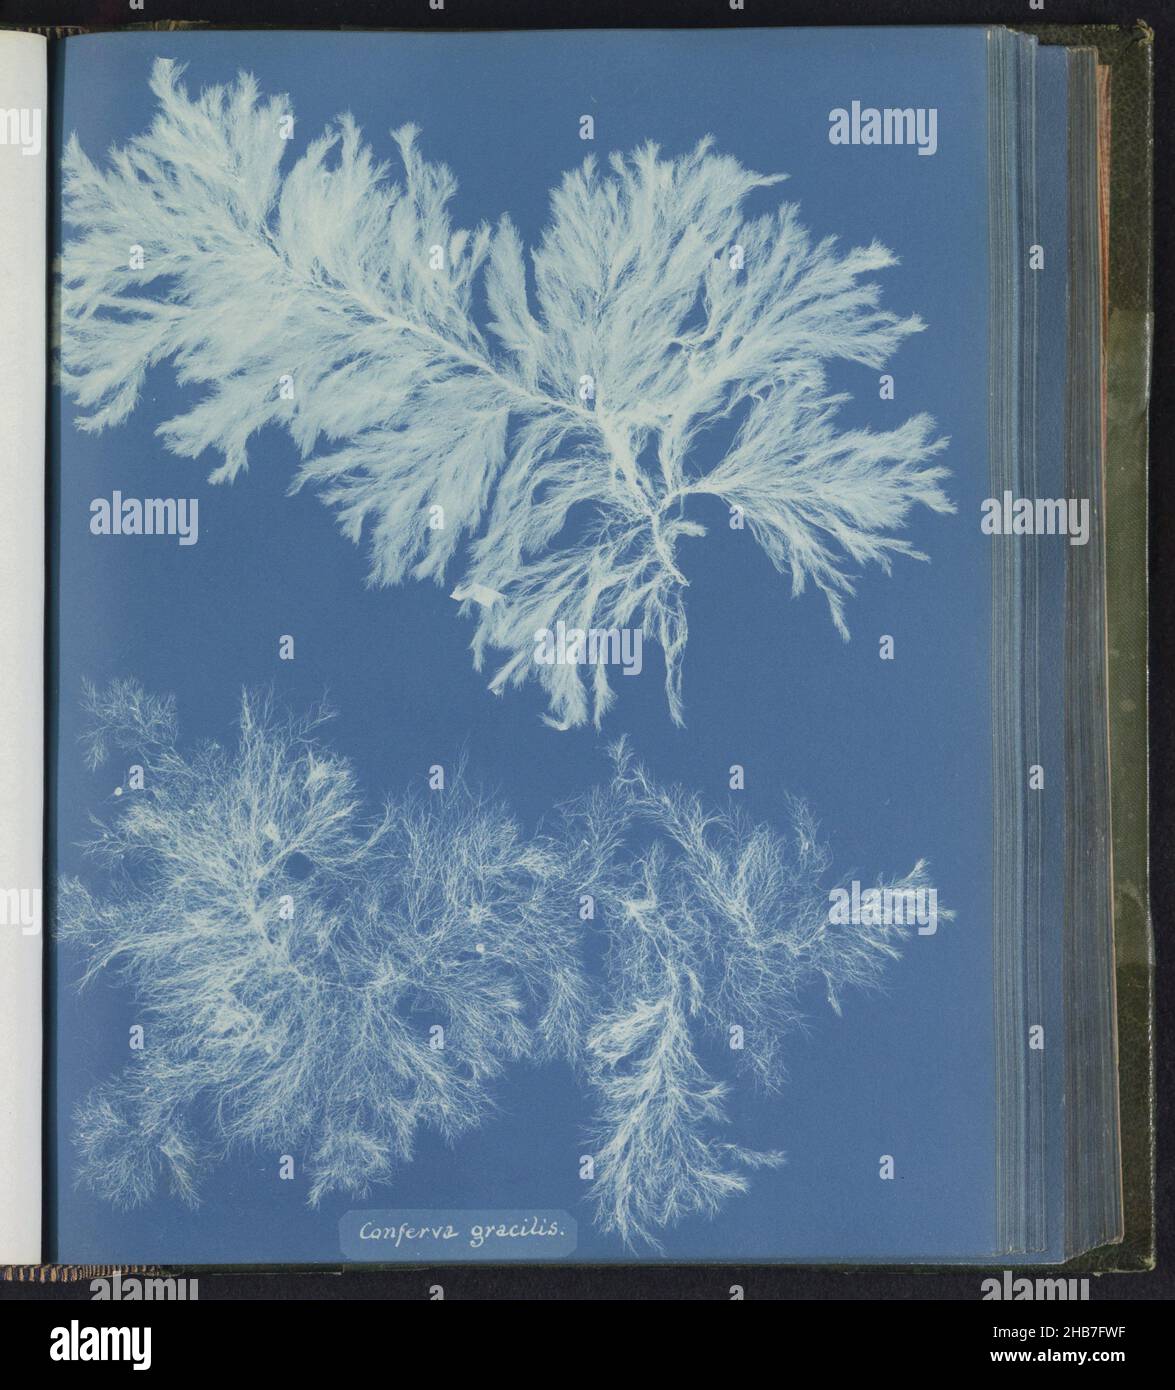 Conferva gracilis, Anna Atkins, United Kingdom, c. 1843 - c. 1853, photographic support, cyanotype, height 250 mm × width 200 mm Stock Photo